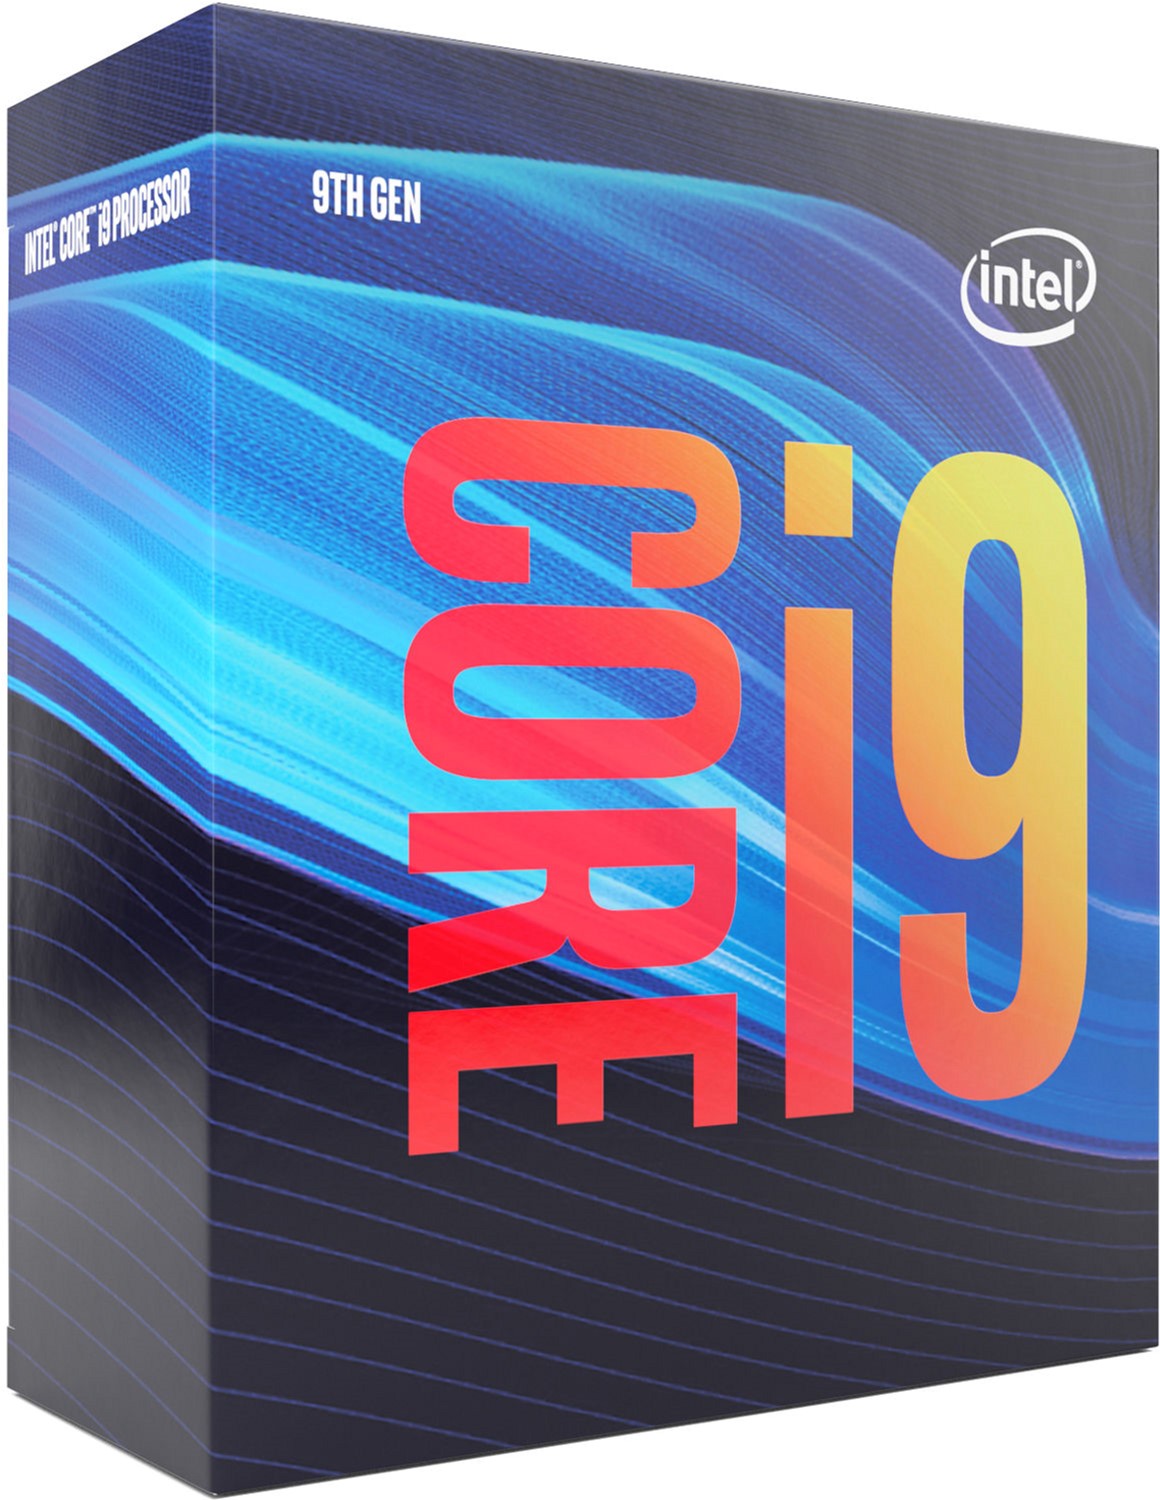 Акція на Процессор Intel Core i9-9900 3.1GHz/8GT/s/16MB (BX80684I99900) s1151 BOX від Rozetka UA